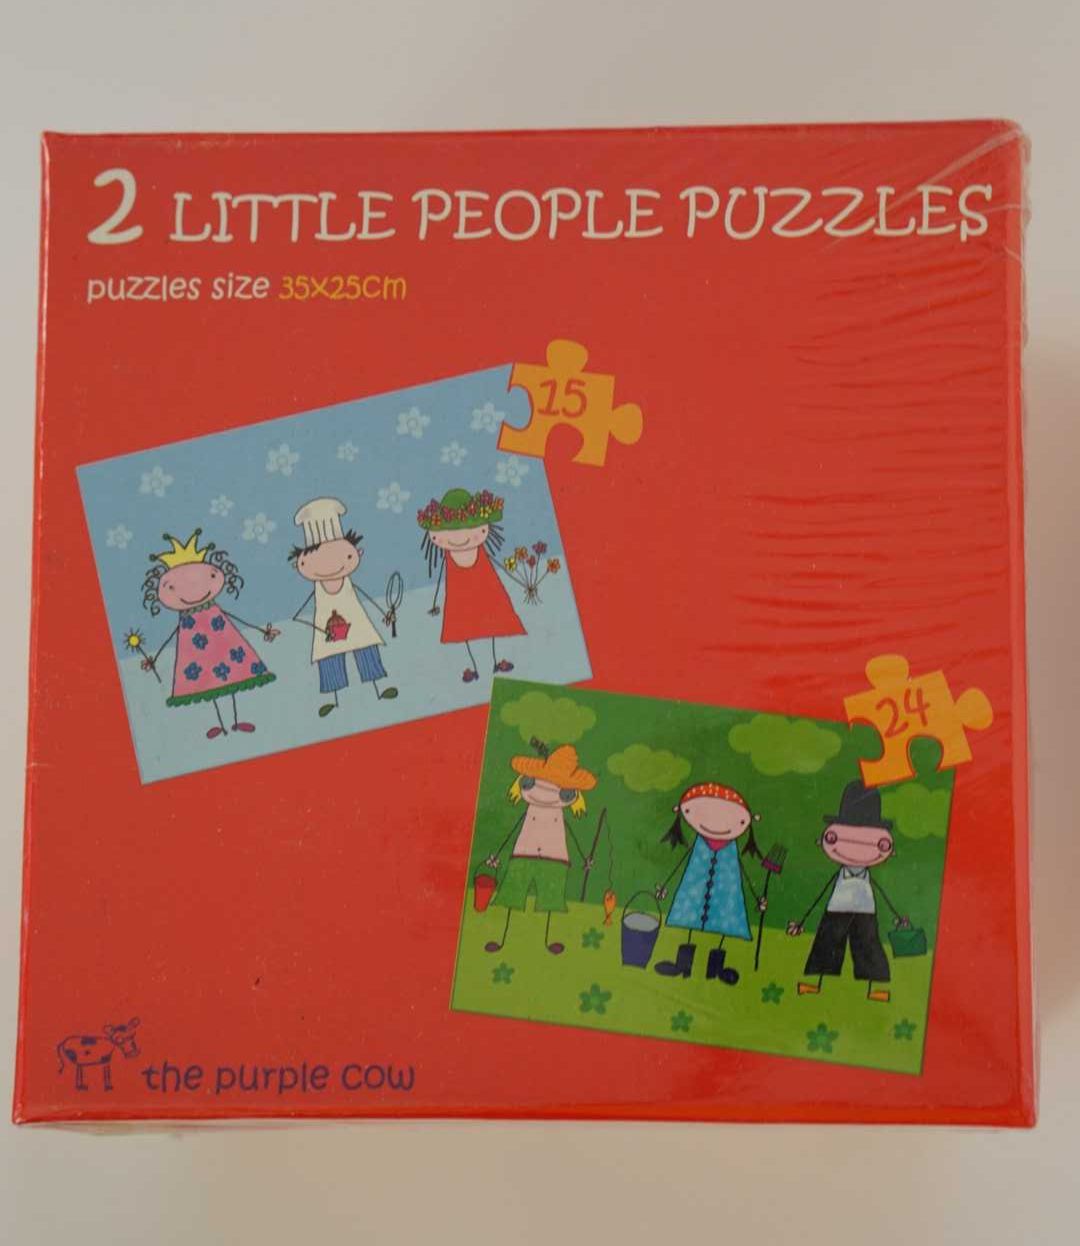 Nowe puzzle (2 obrazki) - The purple cow